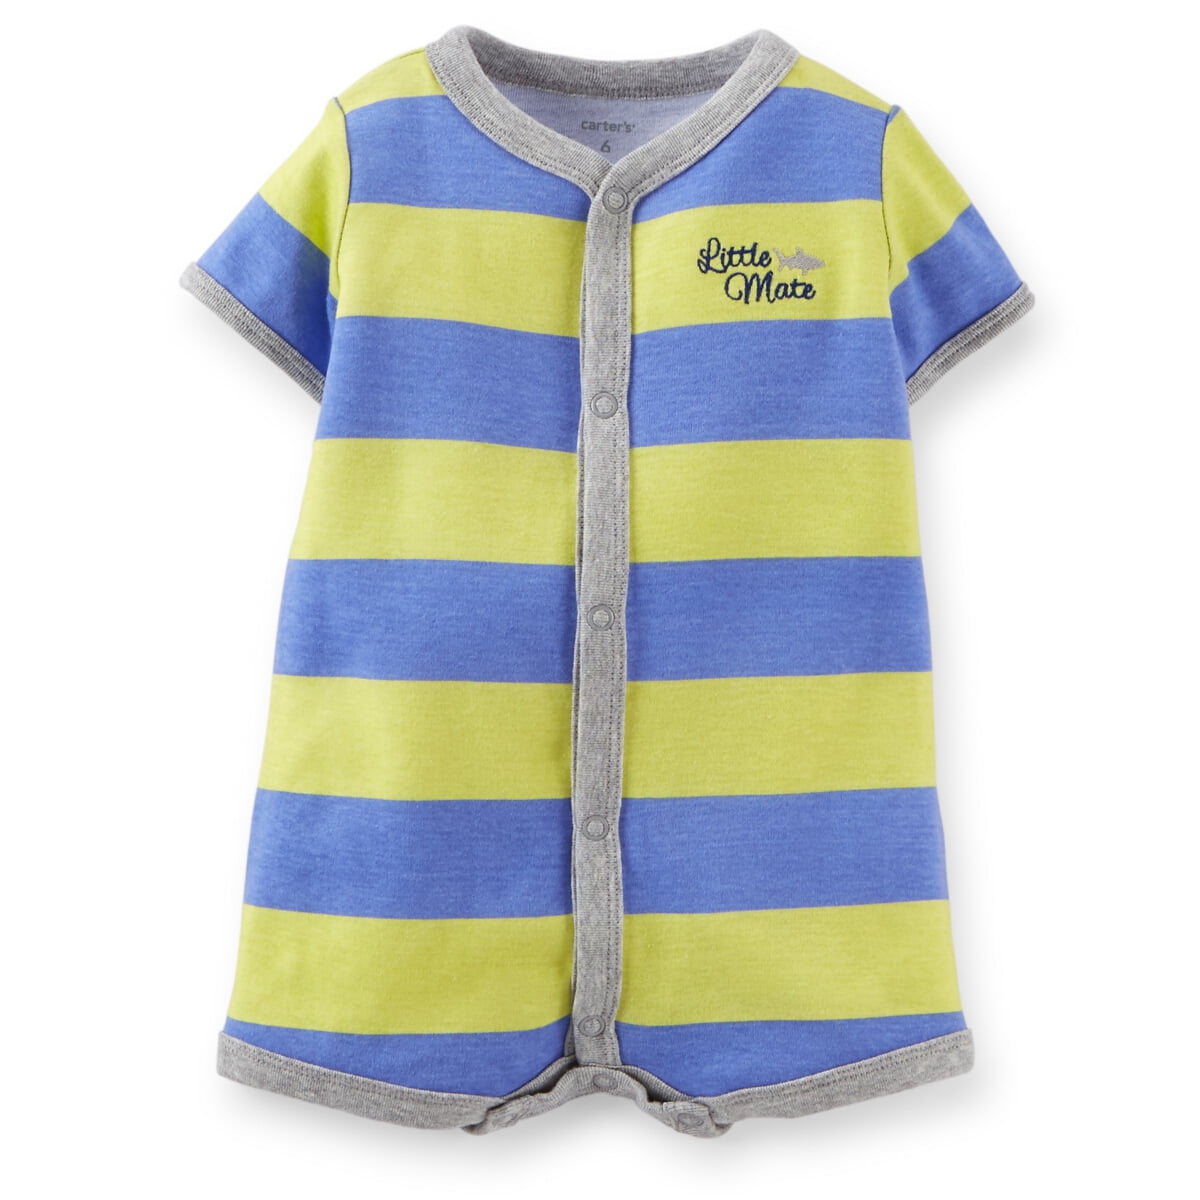 .Carters Boys Baby 2 Piece Playwear Set Scout Yellow Camo 6M 